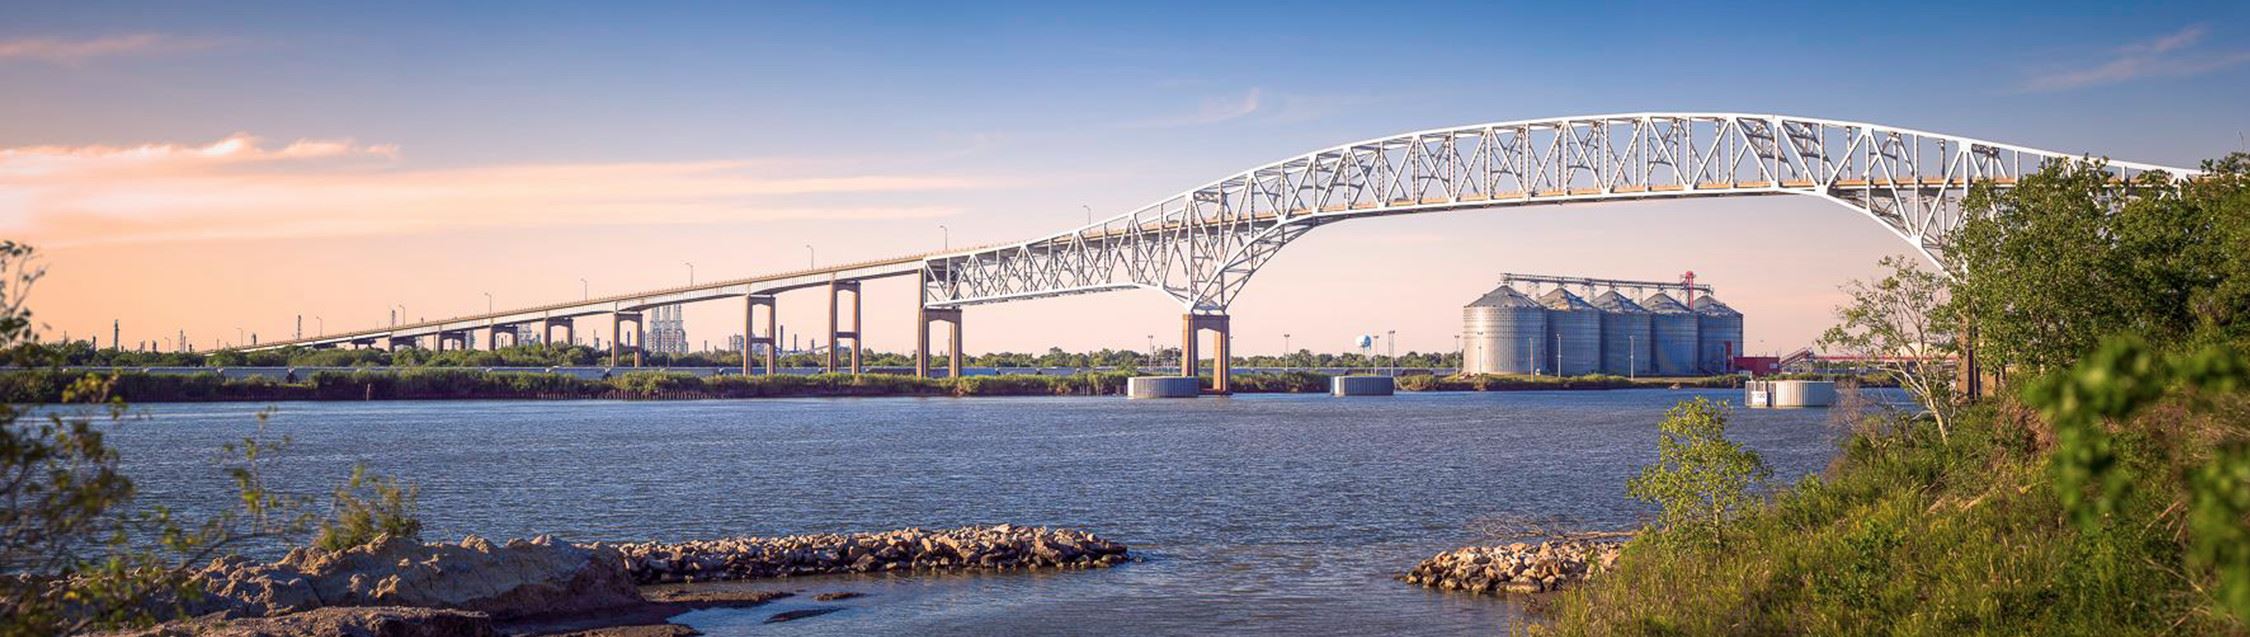 Port Arthur, TX bridge